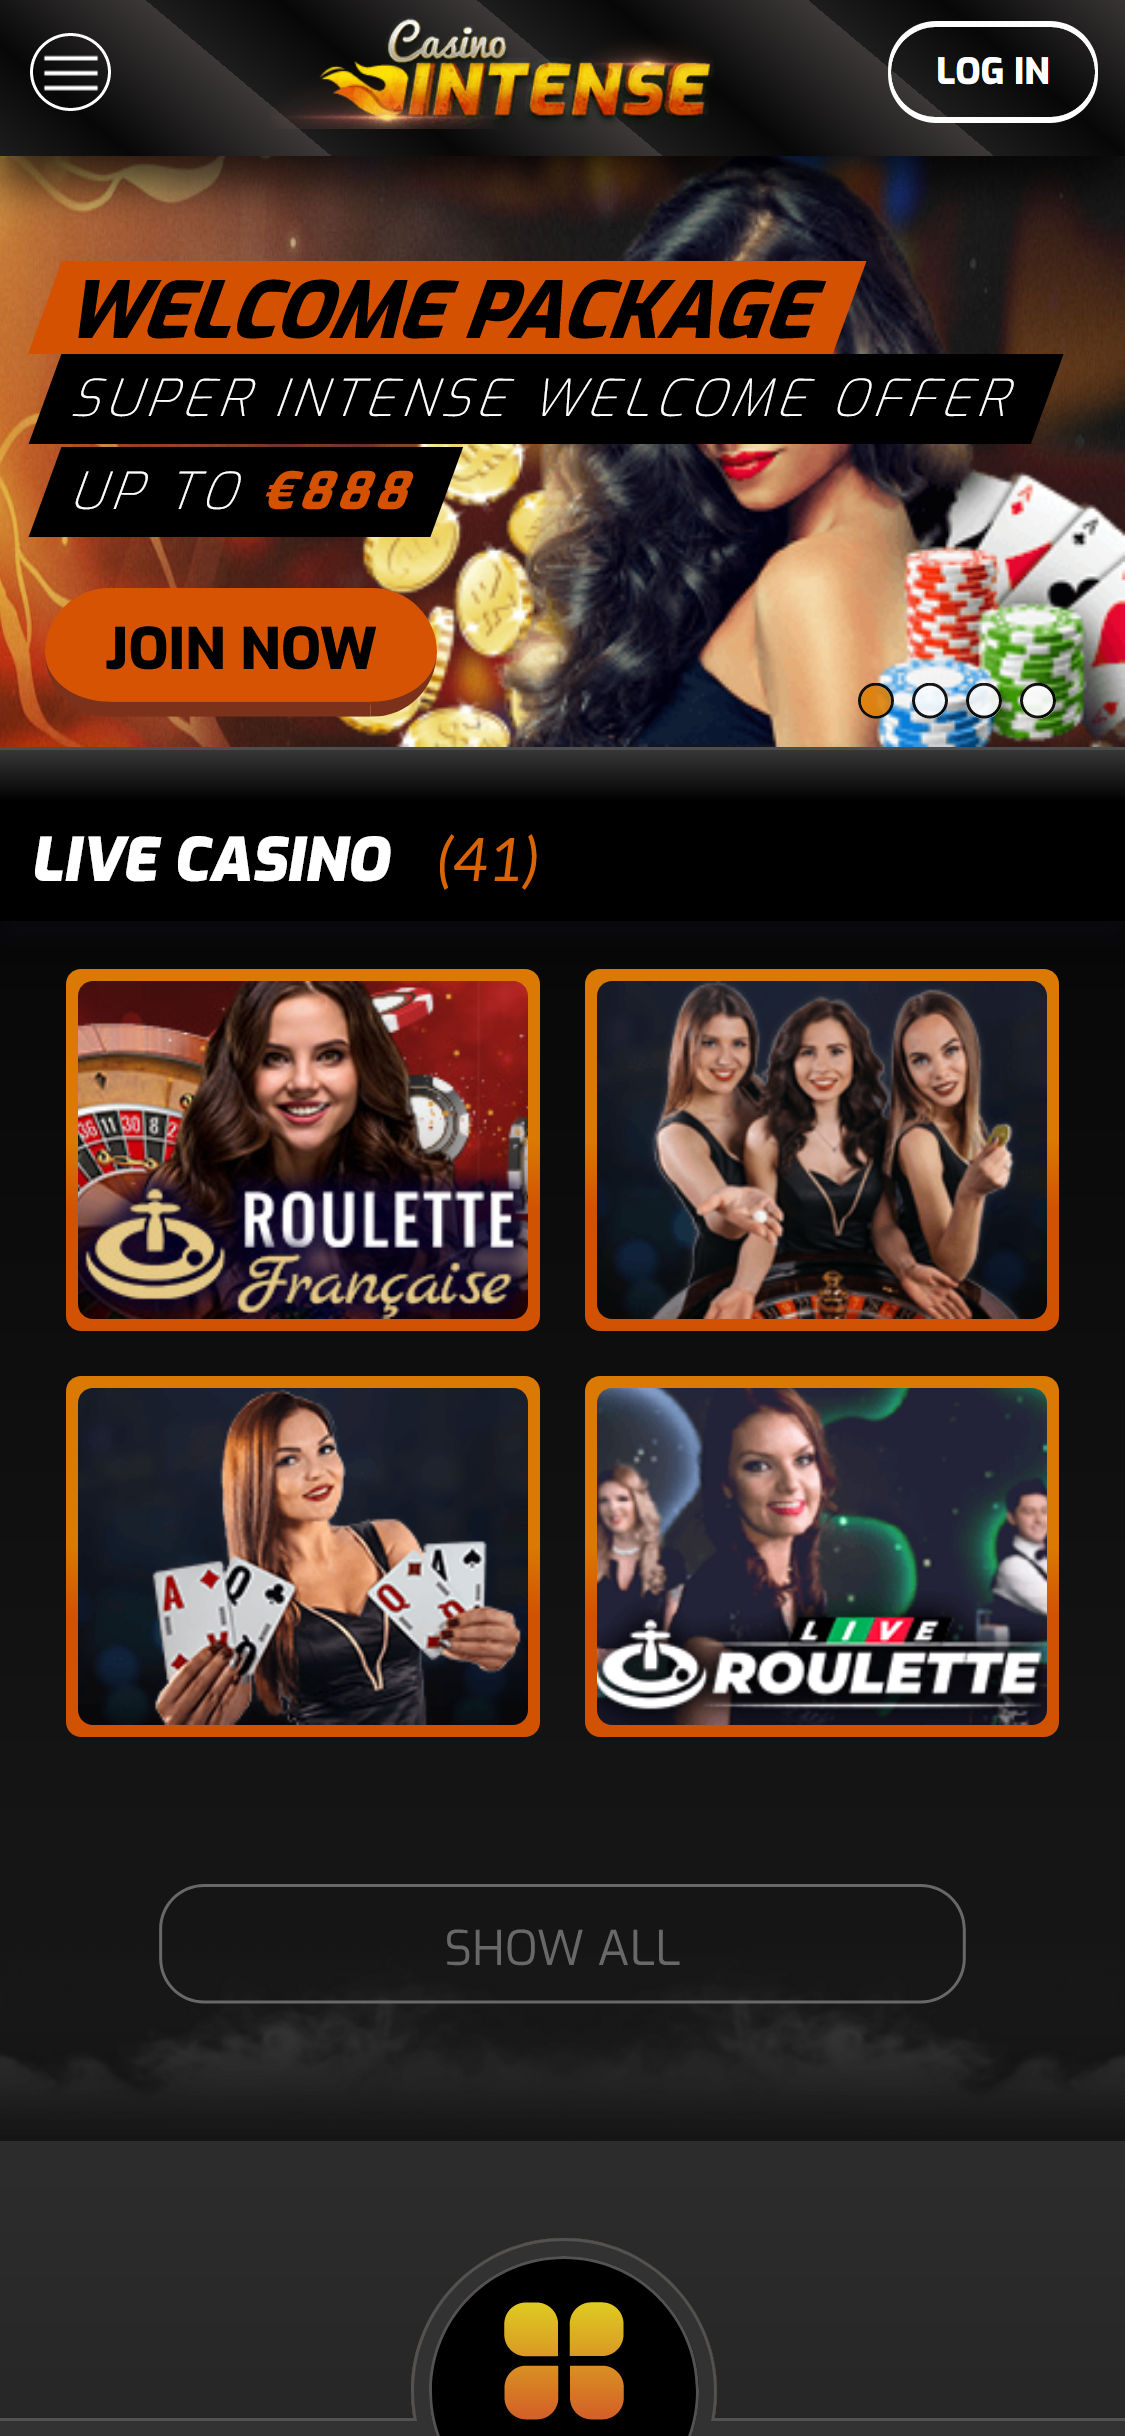 Casino Intense Mobile Live Dealer Games Review